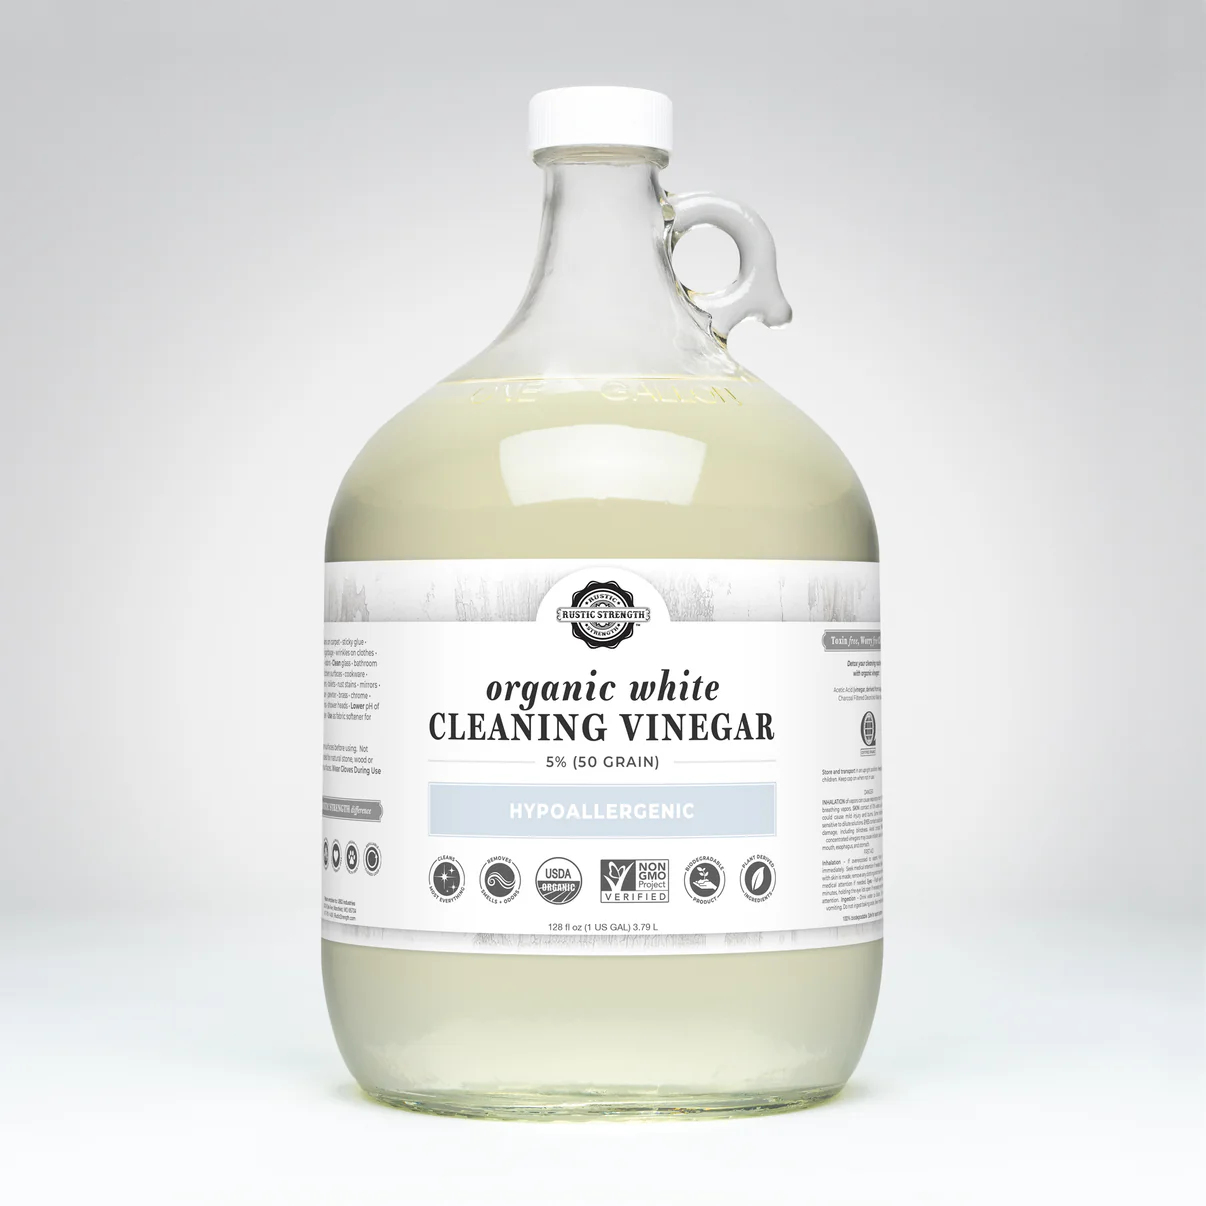 Rustic Strength USDA Certified Organic White Cleaning Vinegar